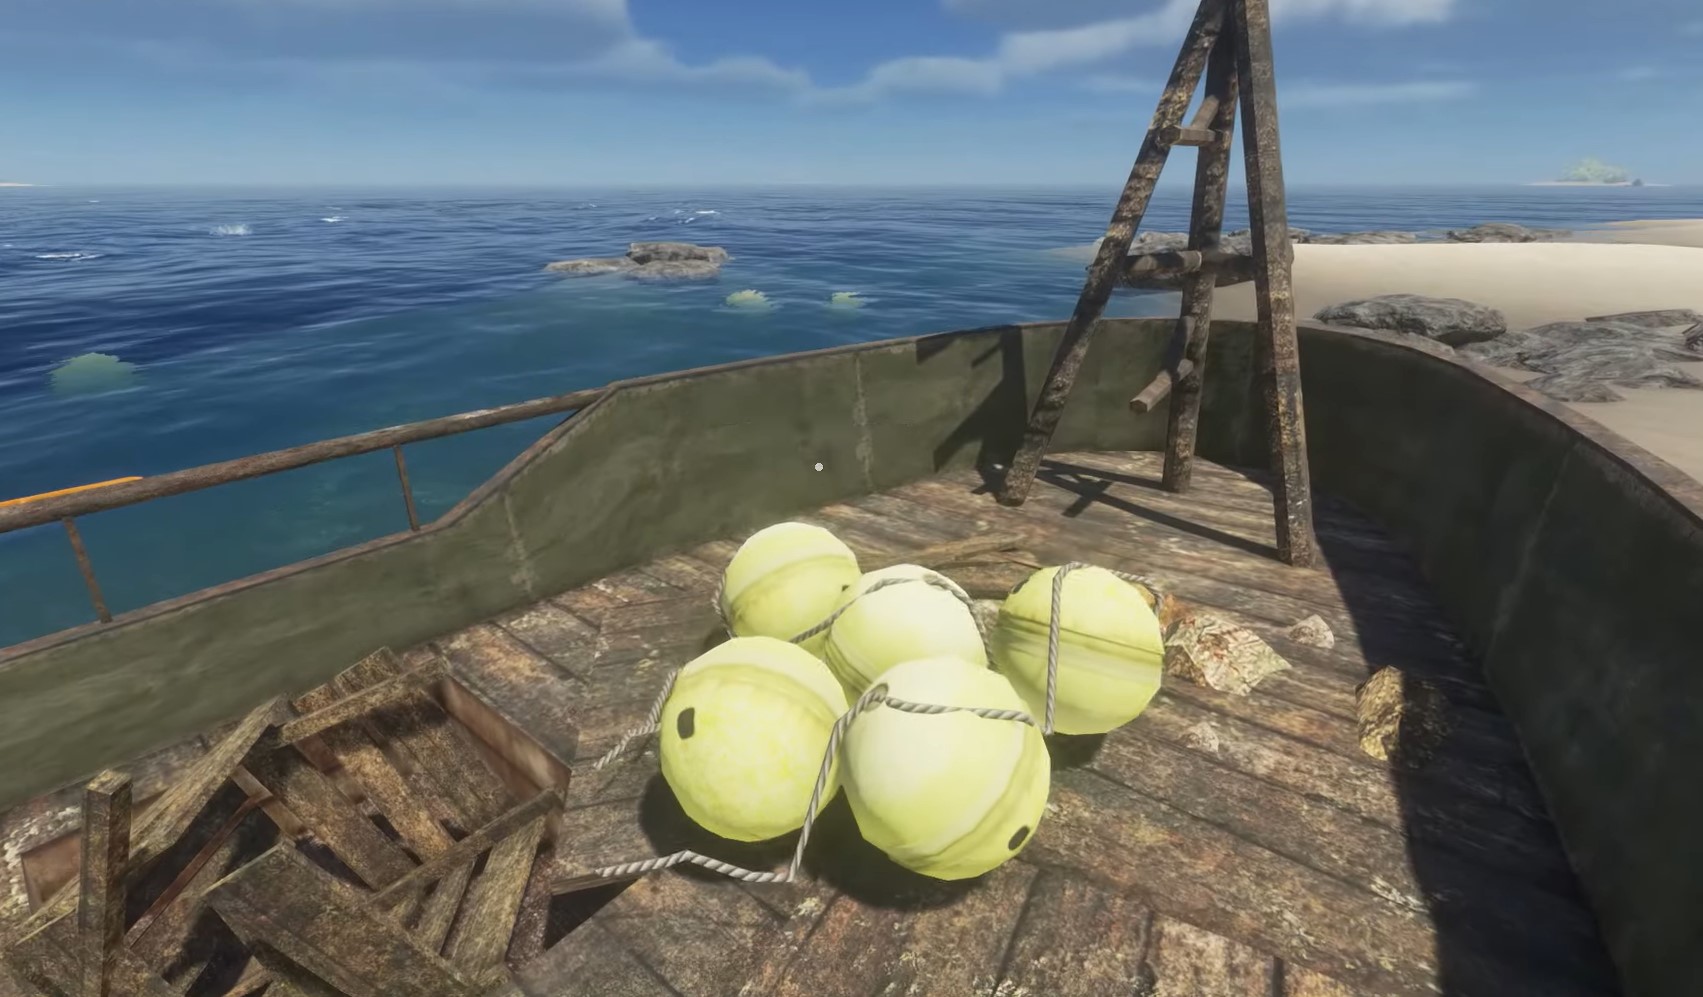 Stranded Deep - Buoy Balls on a shipwreck